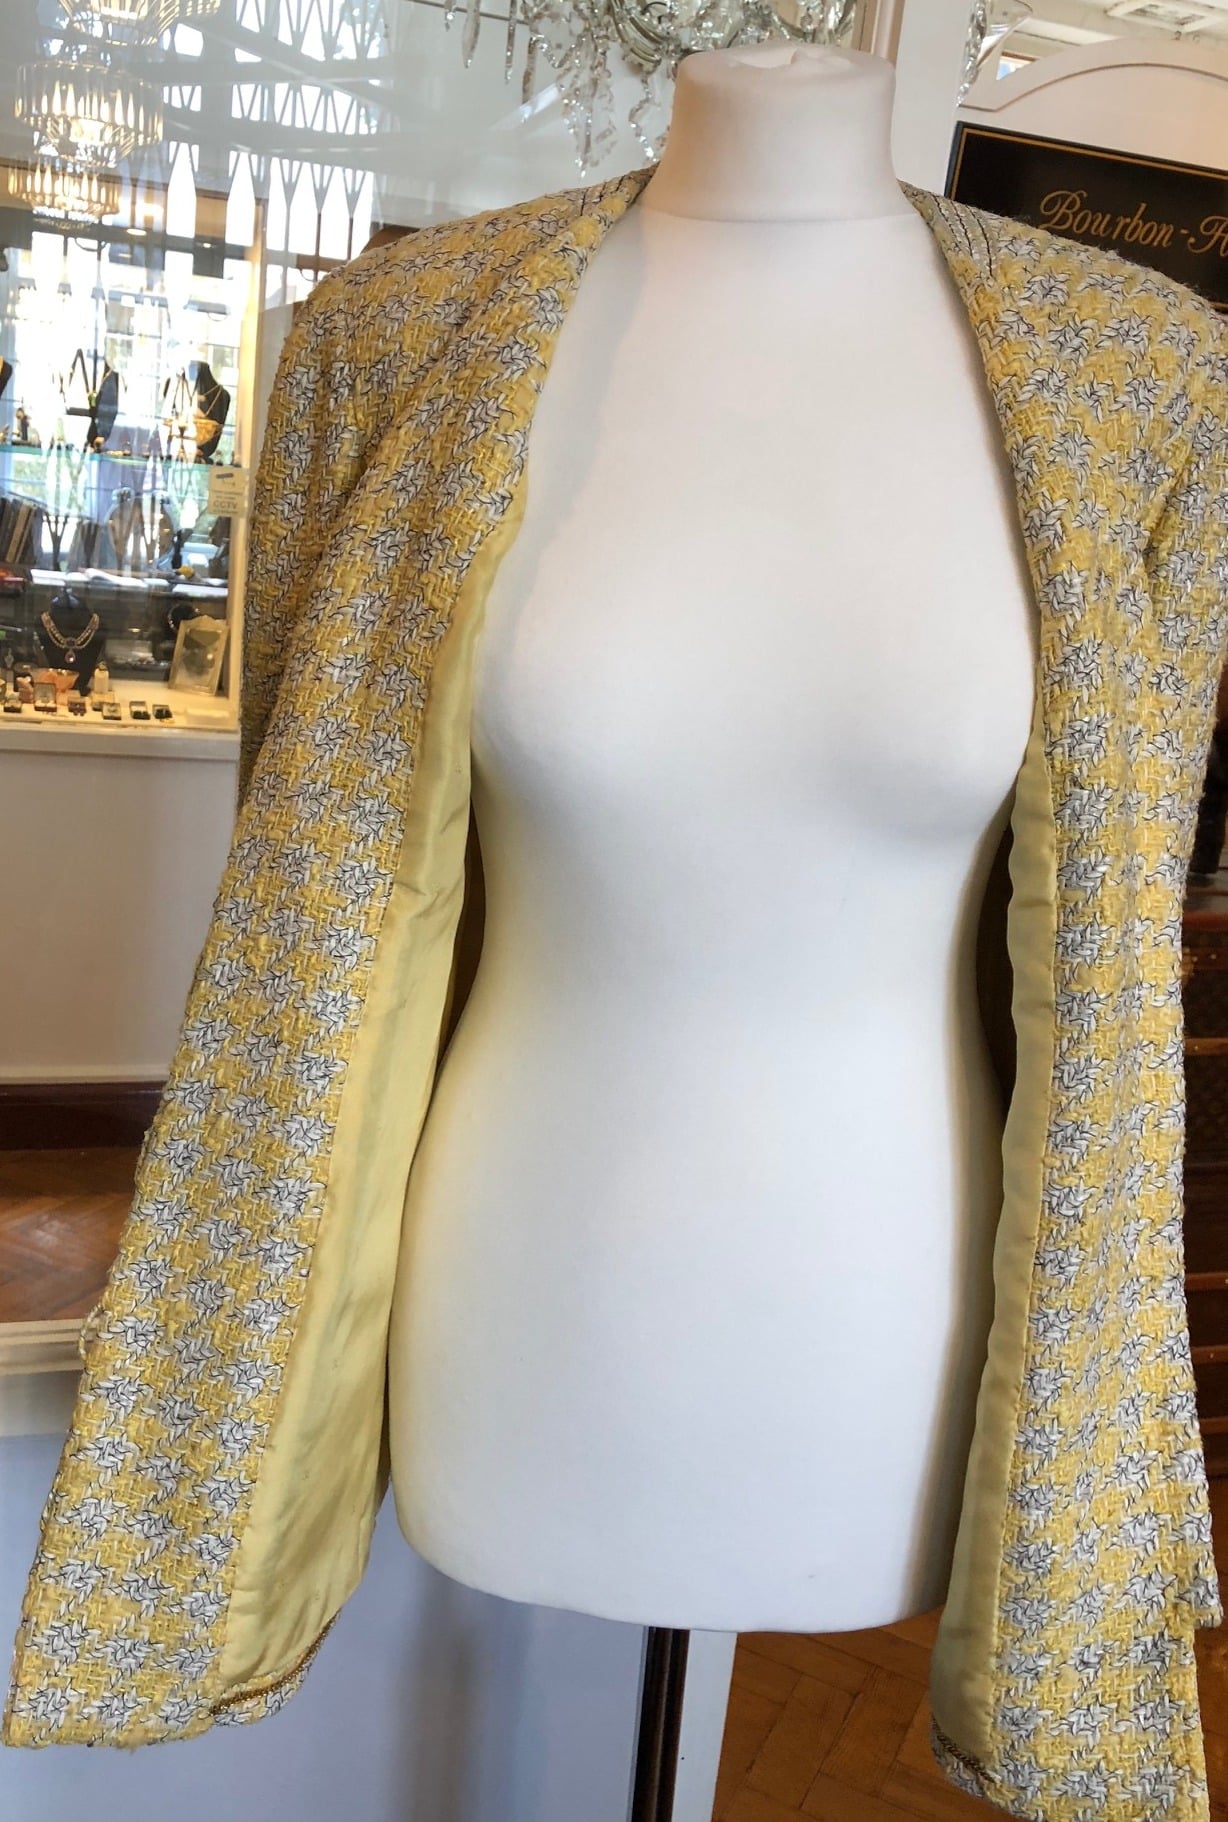 CHANEL Jacket Vintage Tweed Trimmed Jewel Buttons - Chelsea